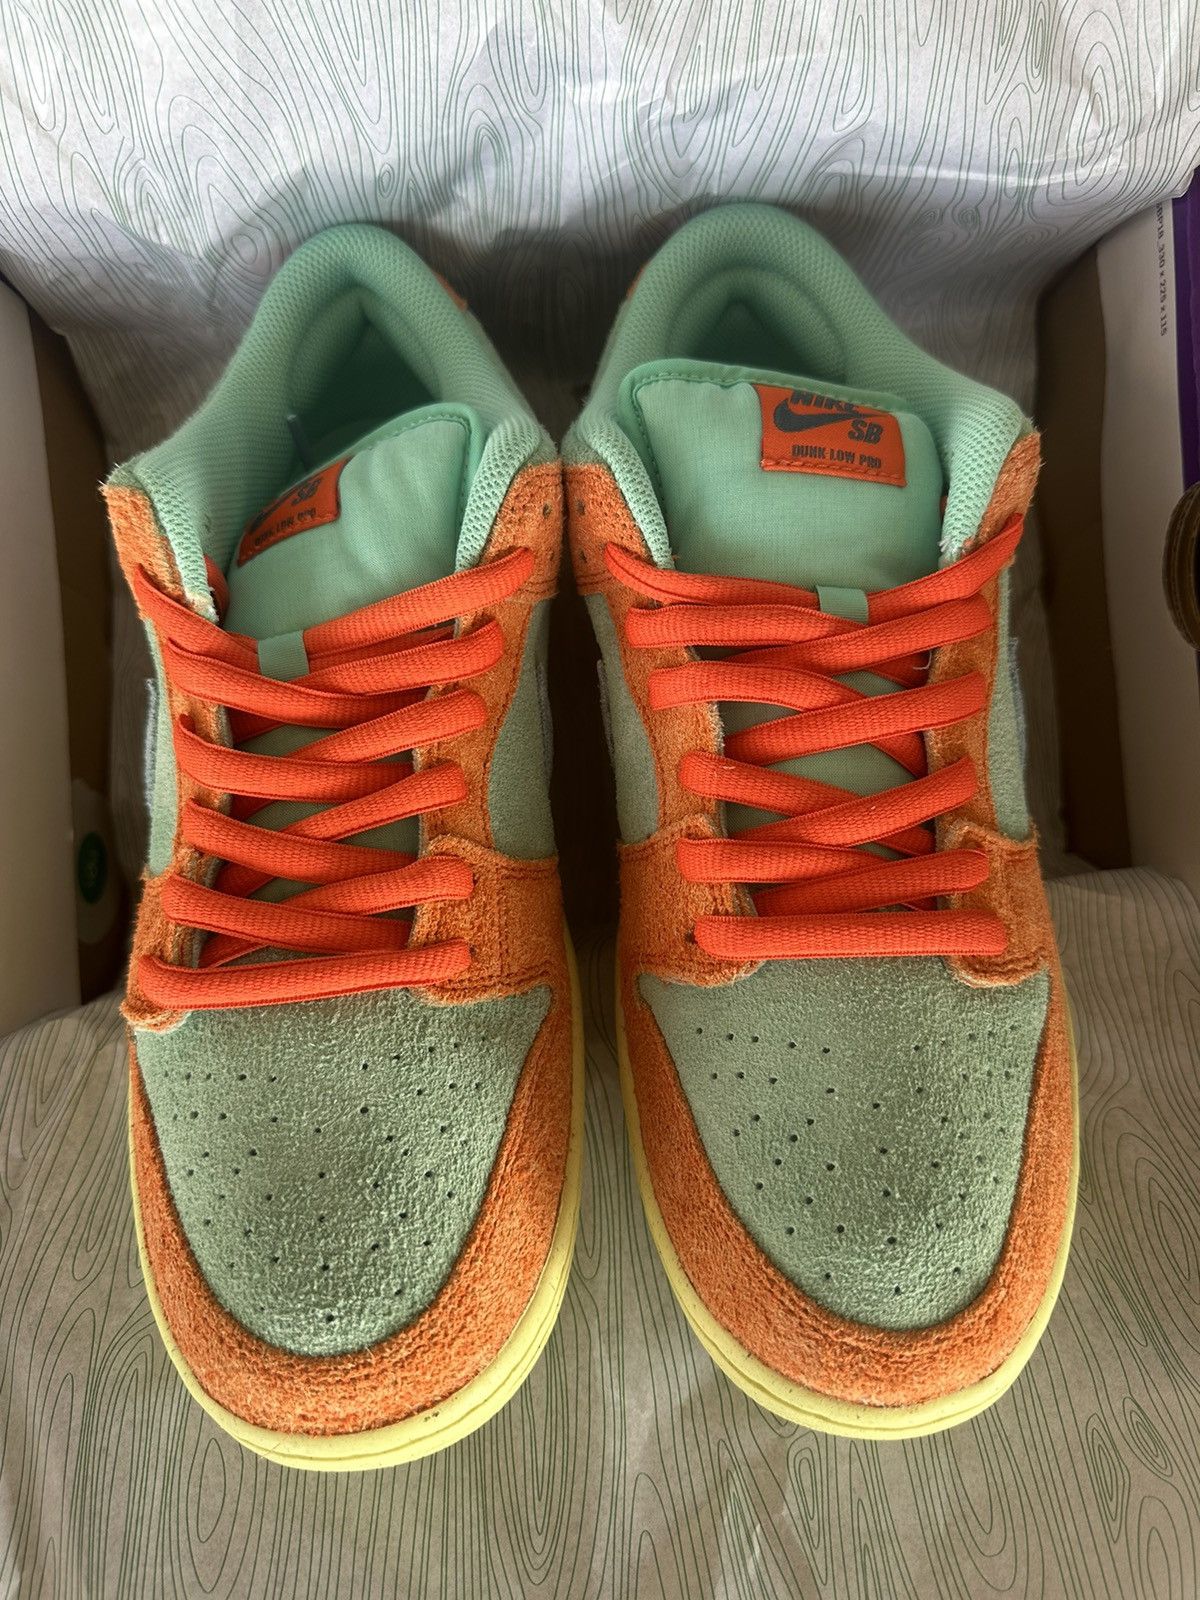 Nike Nike Dunk Low SB Orange Emerald Rise | Grailed